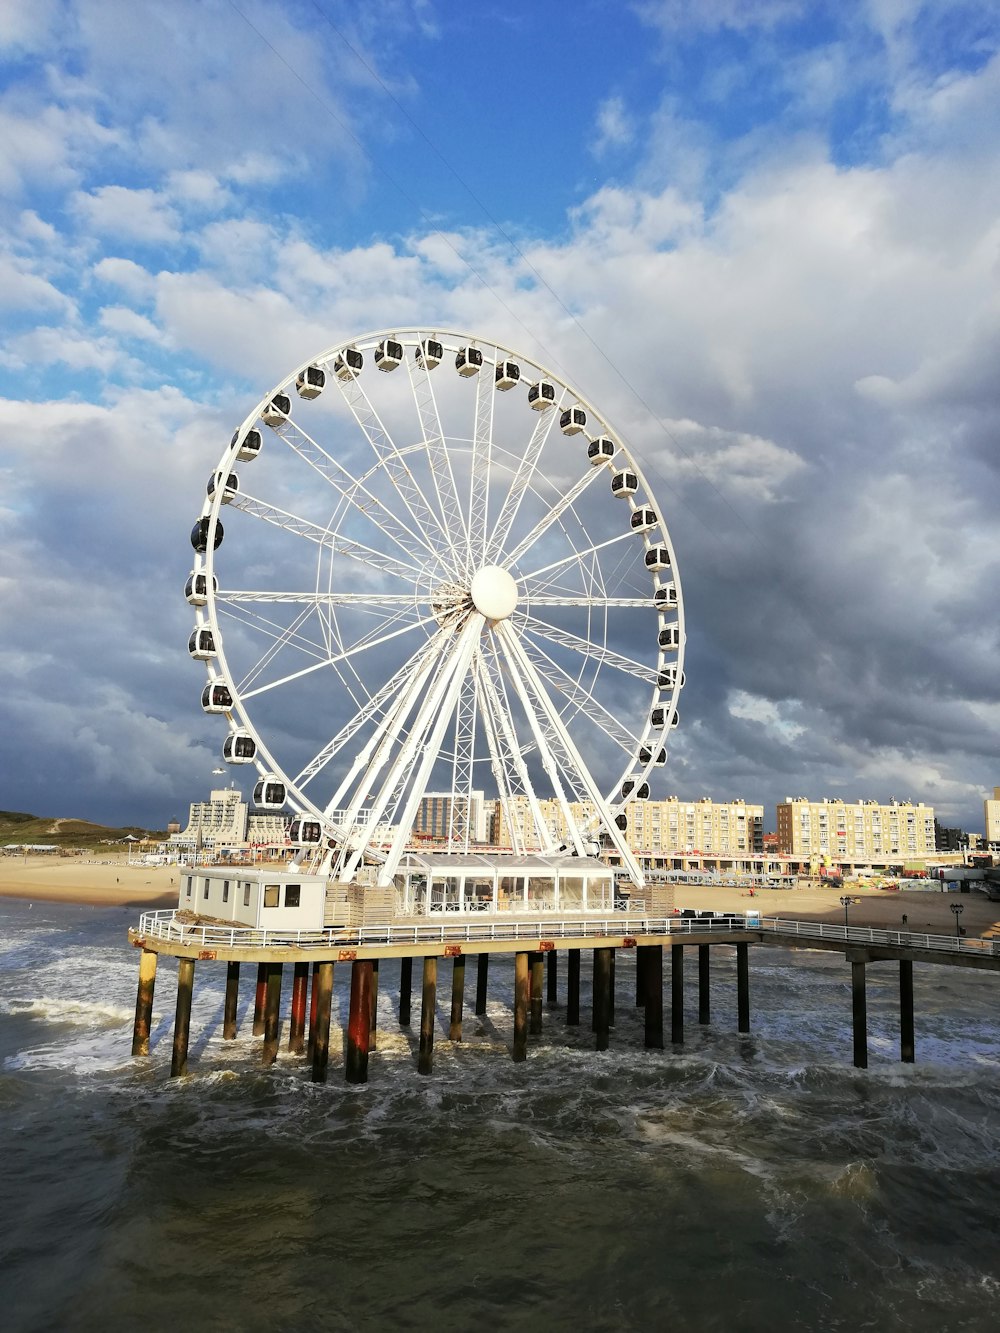 Ferris Wheel near body of water during daytime